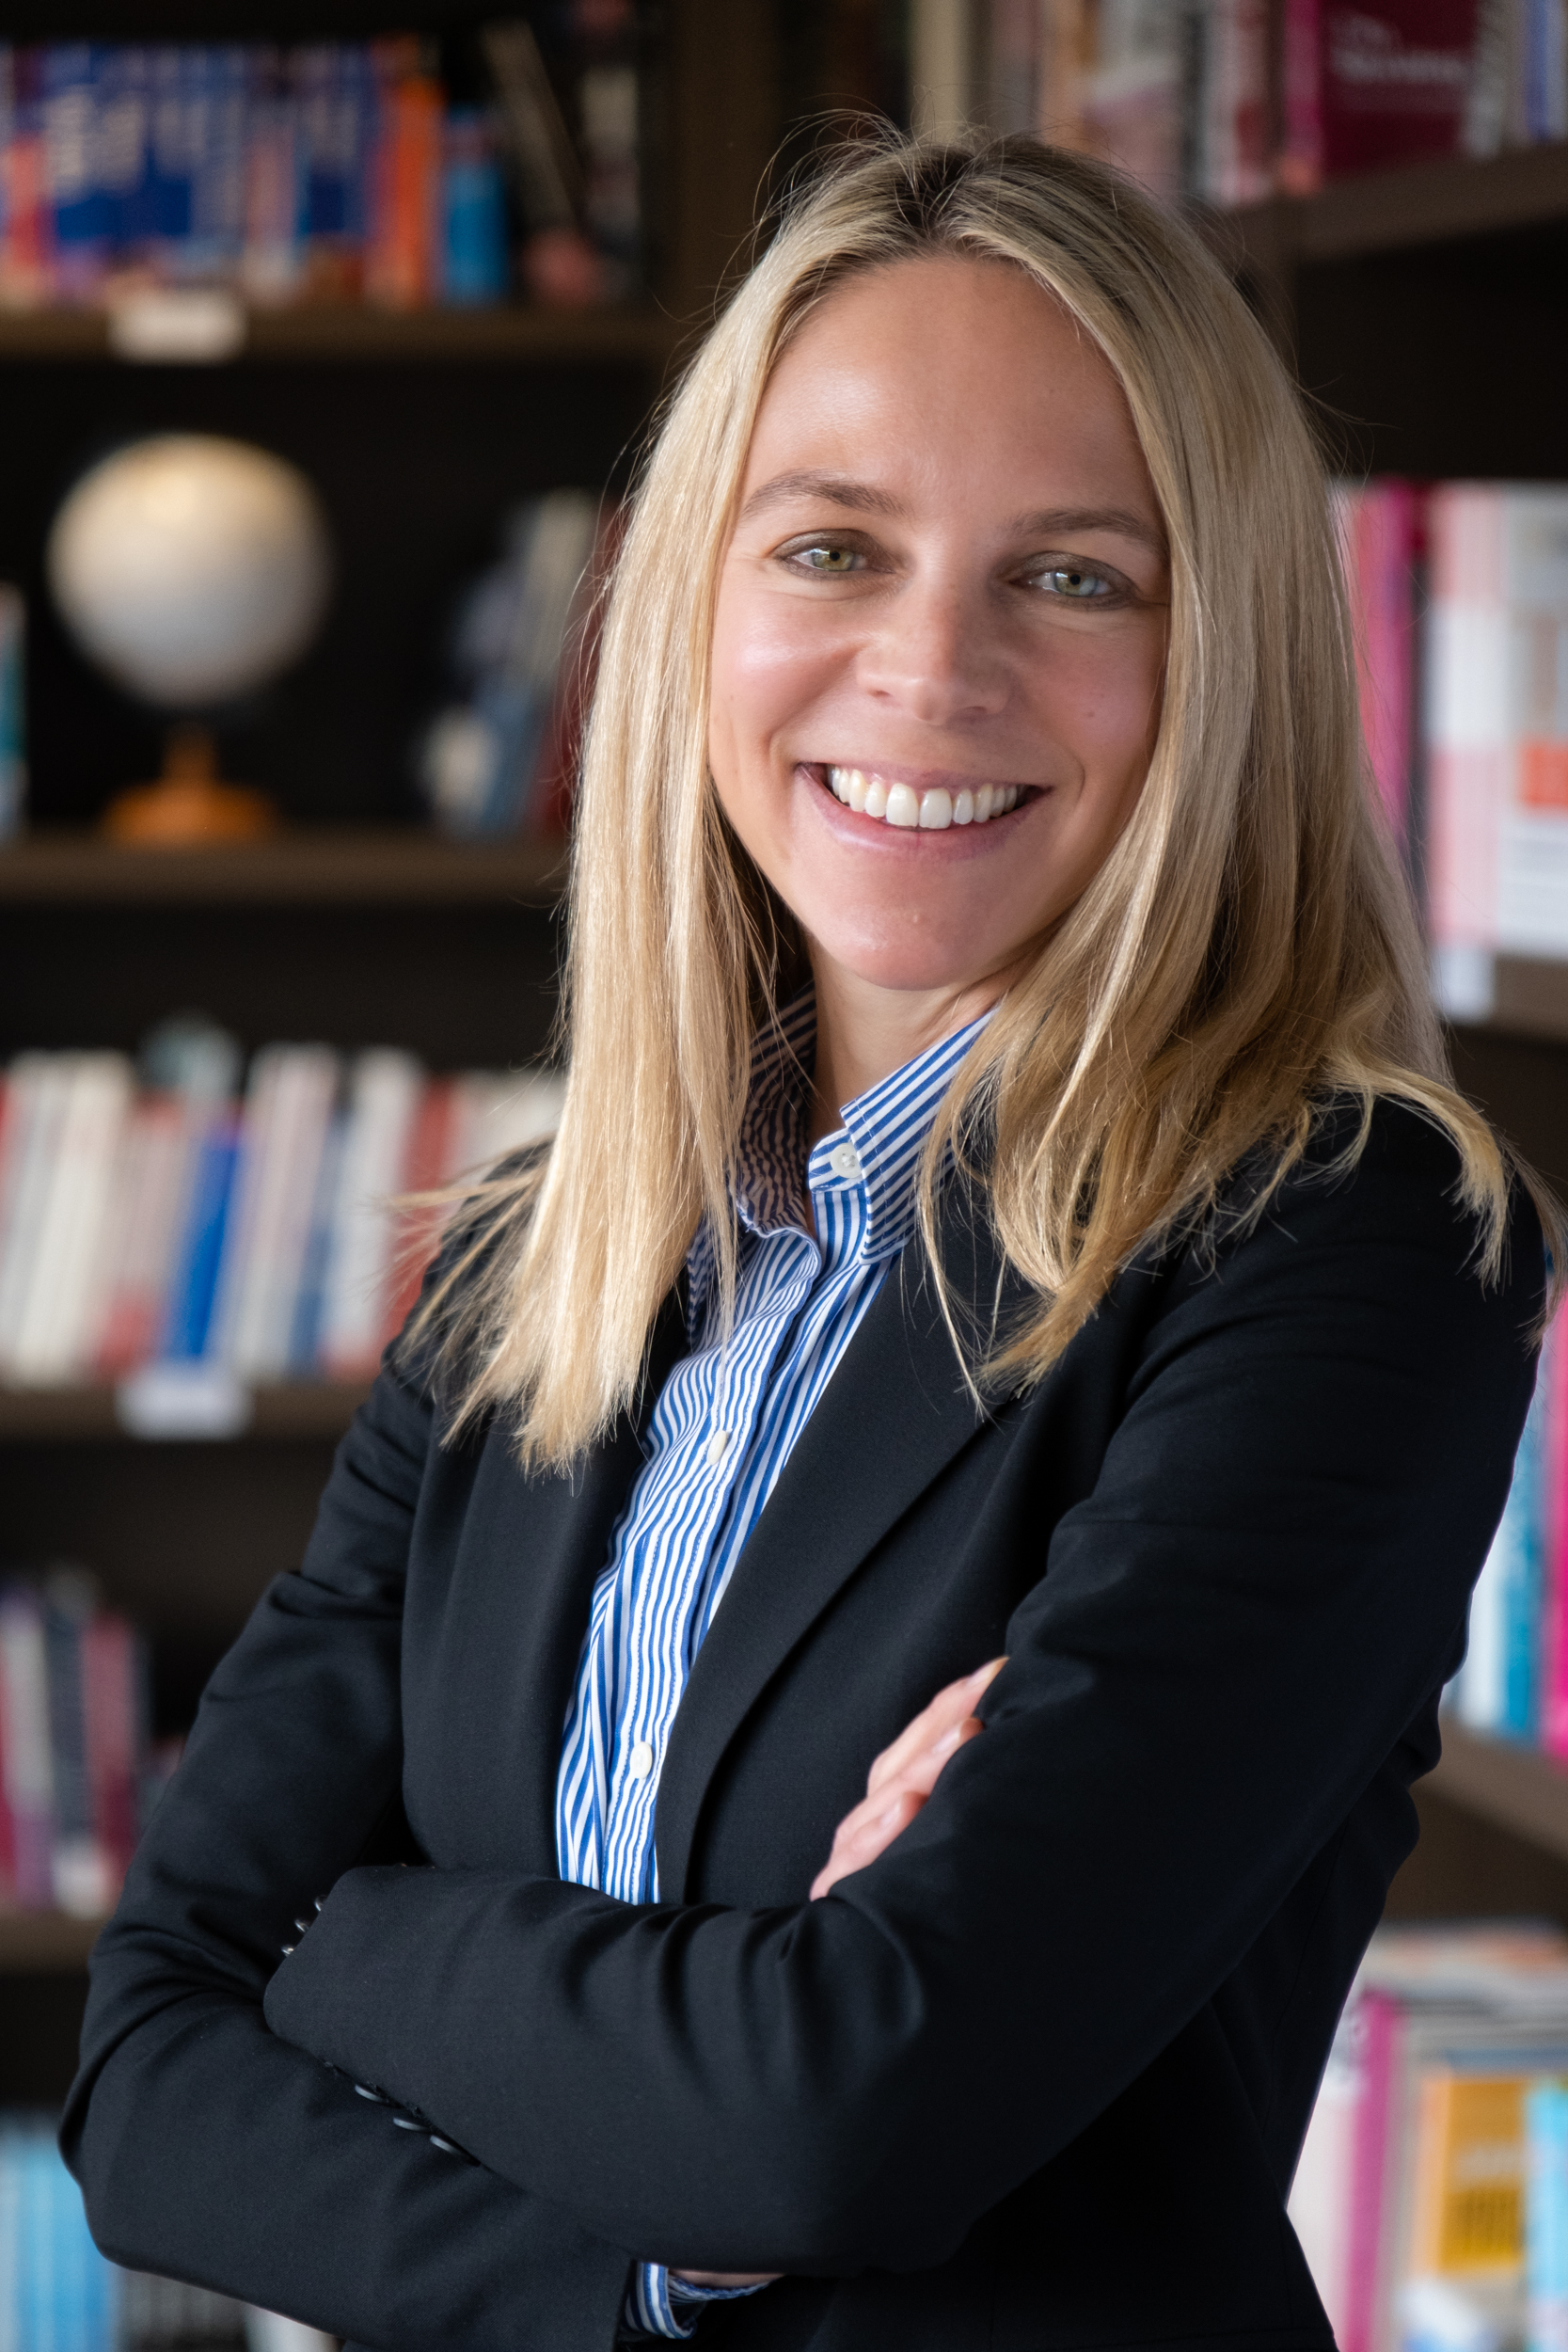 Crestone's Eliza Leach, Managing Director of Client Advisory and Shareholder of Crestone Capital